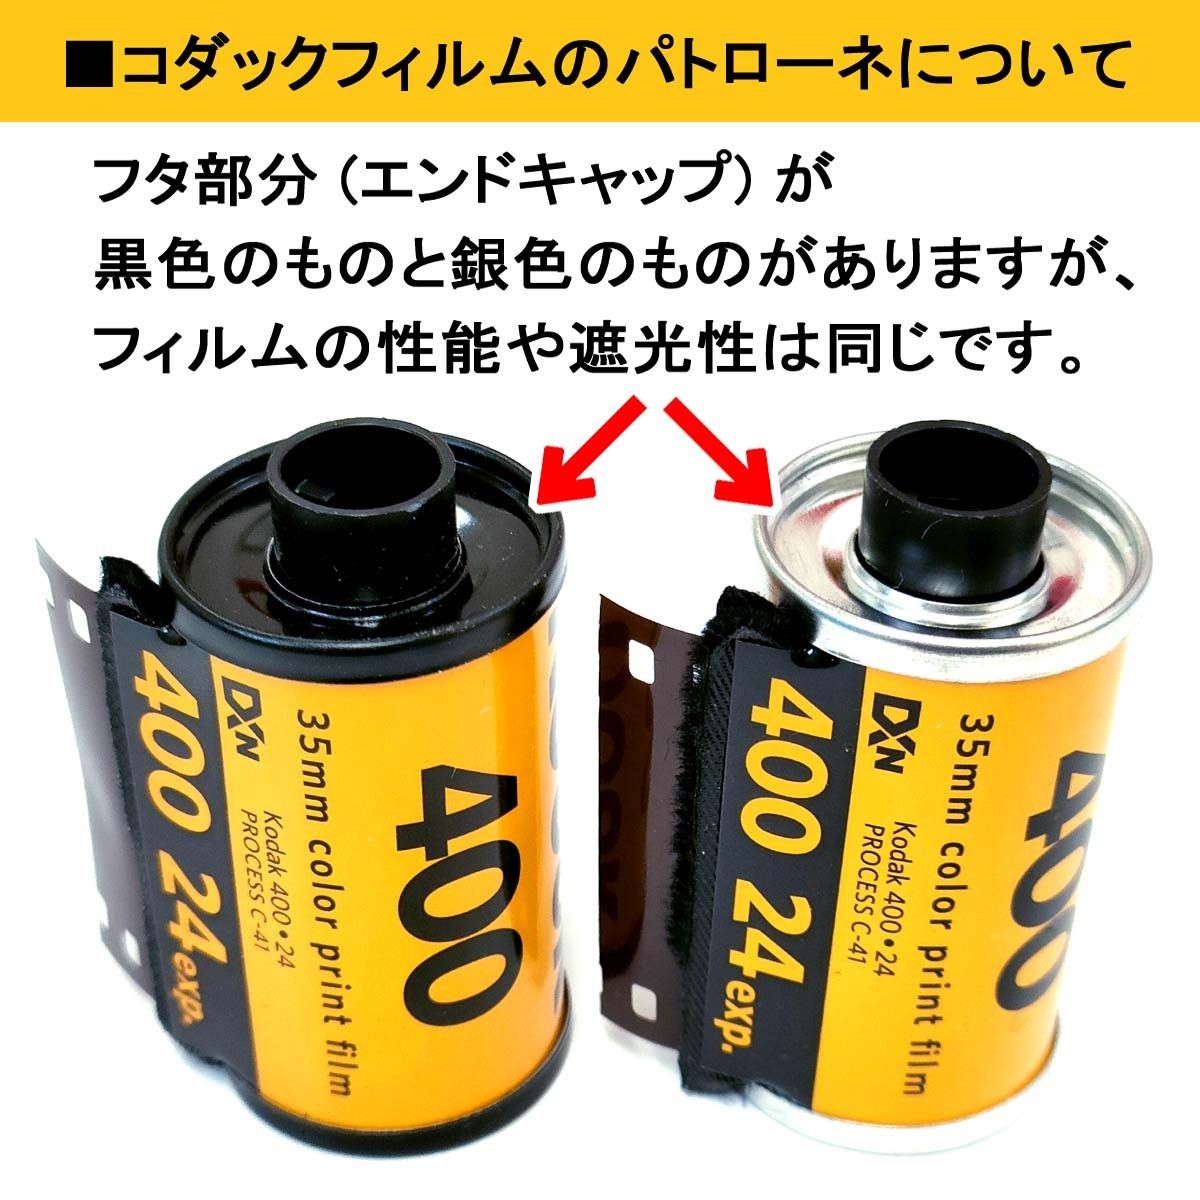 ULTRA MAX 400-24枚撮【3本入】Kodak カラーネガフィルム 135/35mm 新品 コダック ネガフィルム